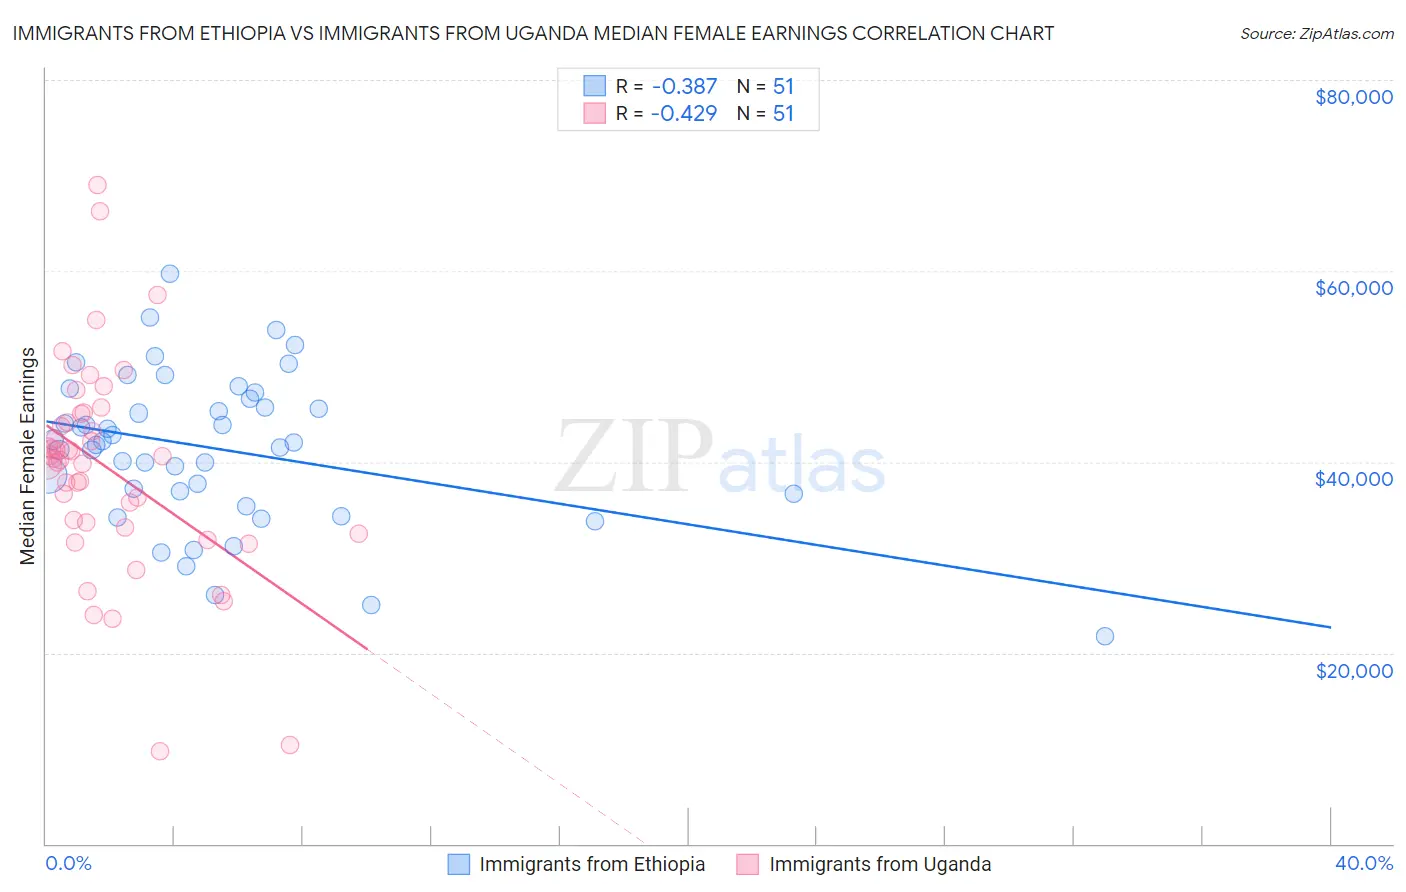 Immigrants from Ethiopia vs Immigrants from Uganda Median Female Earnings